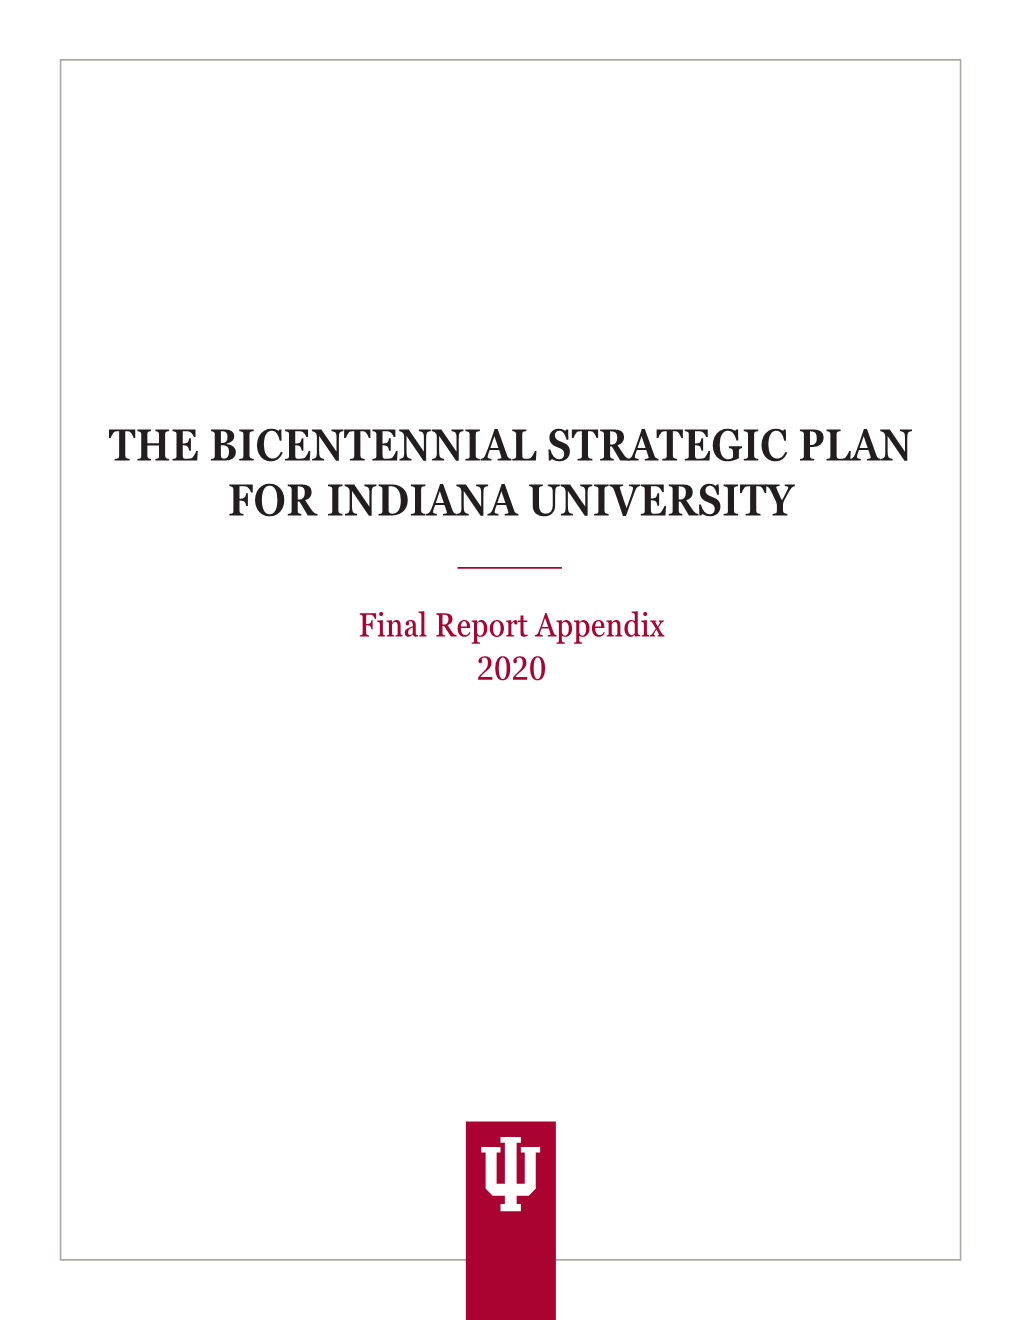 The Bicentennial Strategic Plan for Indiana University